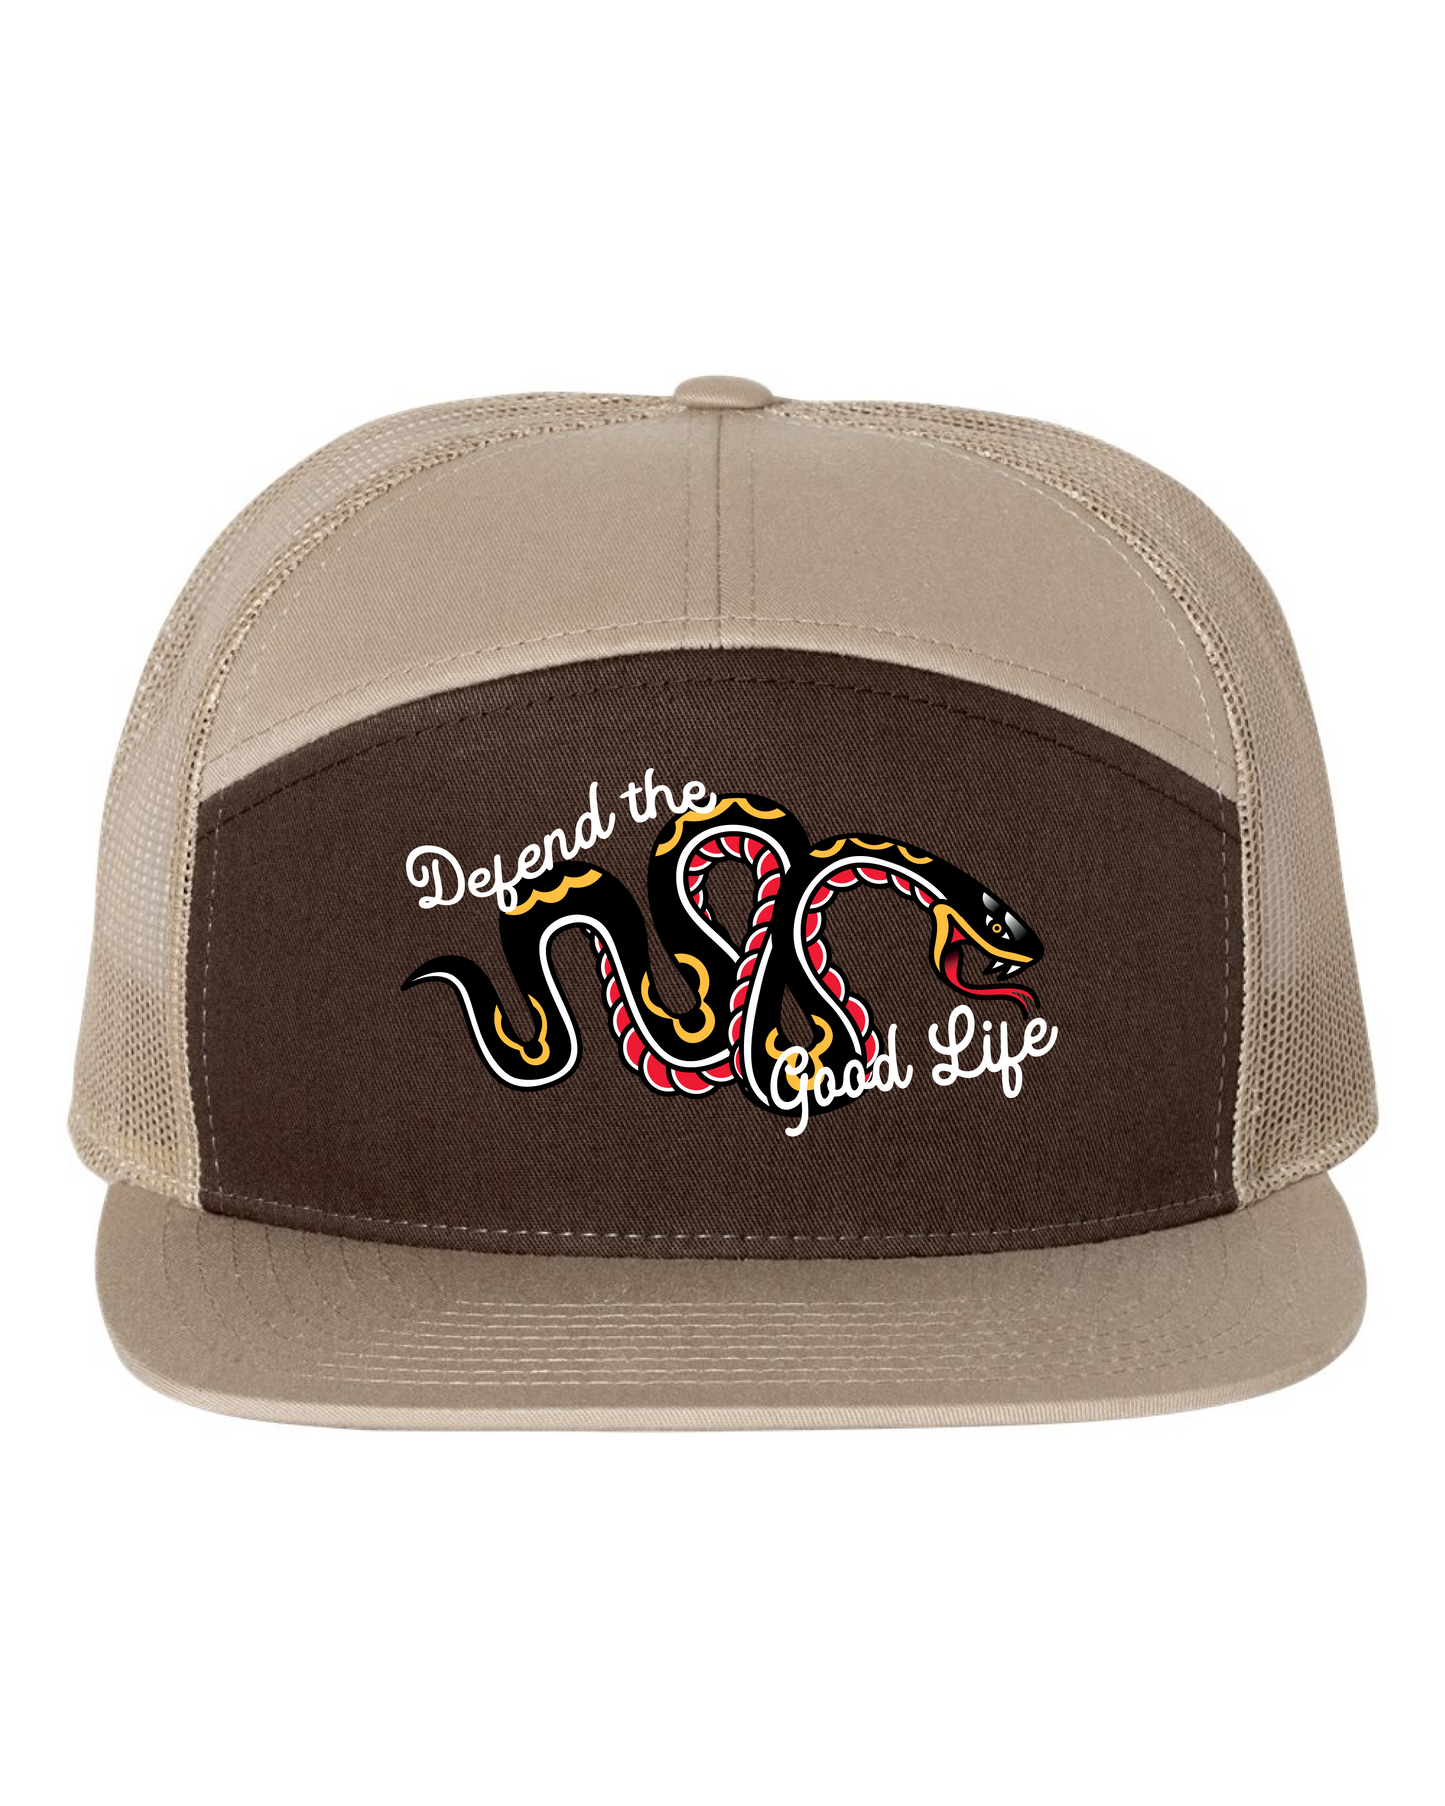 Defend the Good Life Snake - Trucker Hat